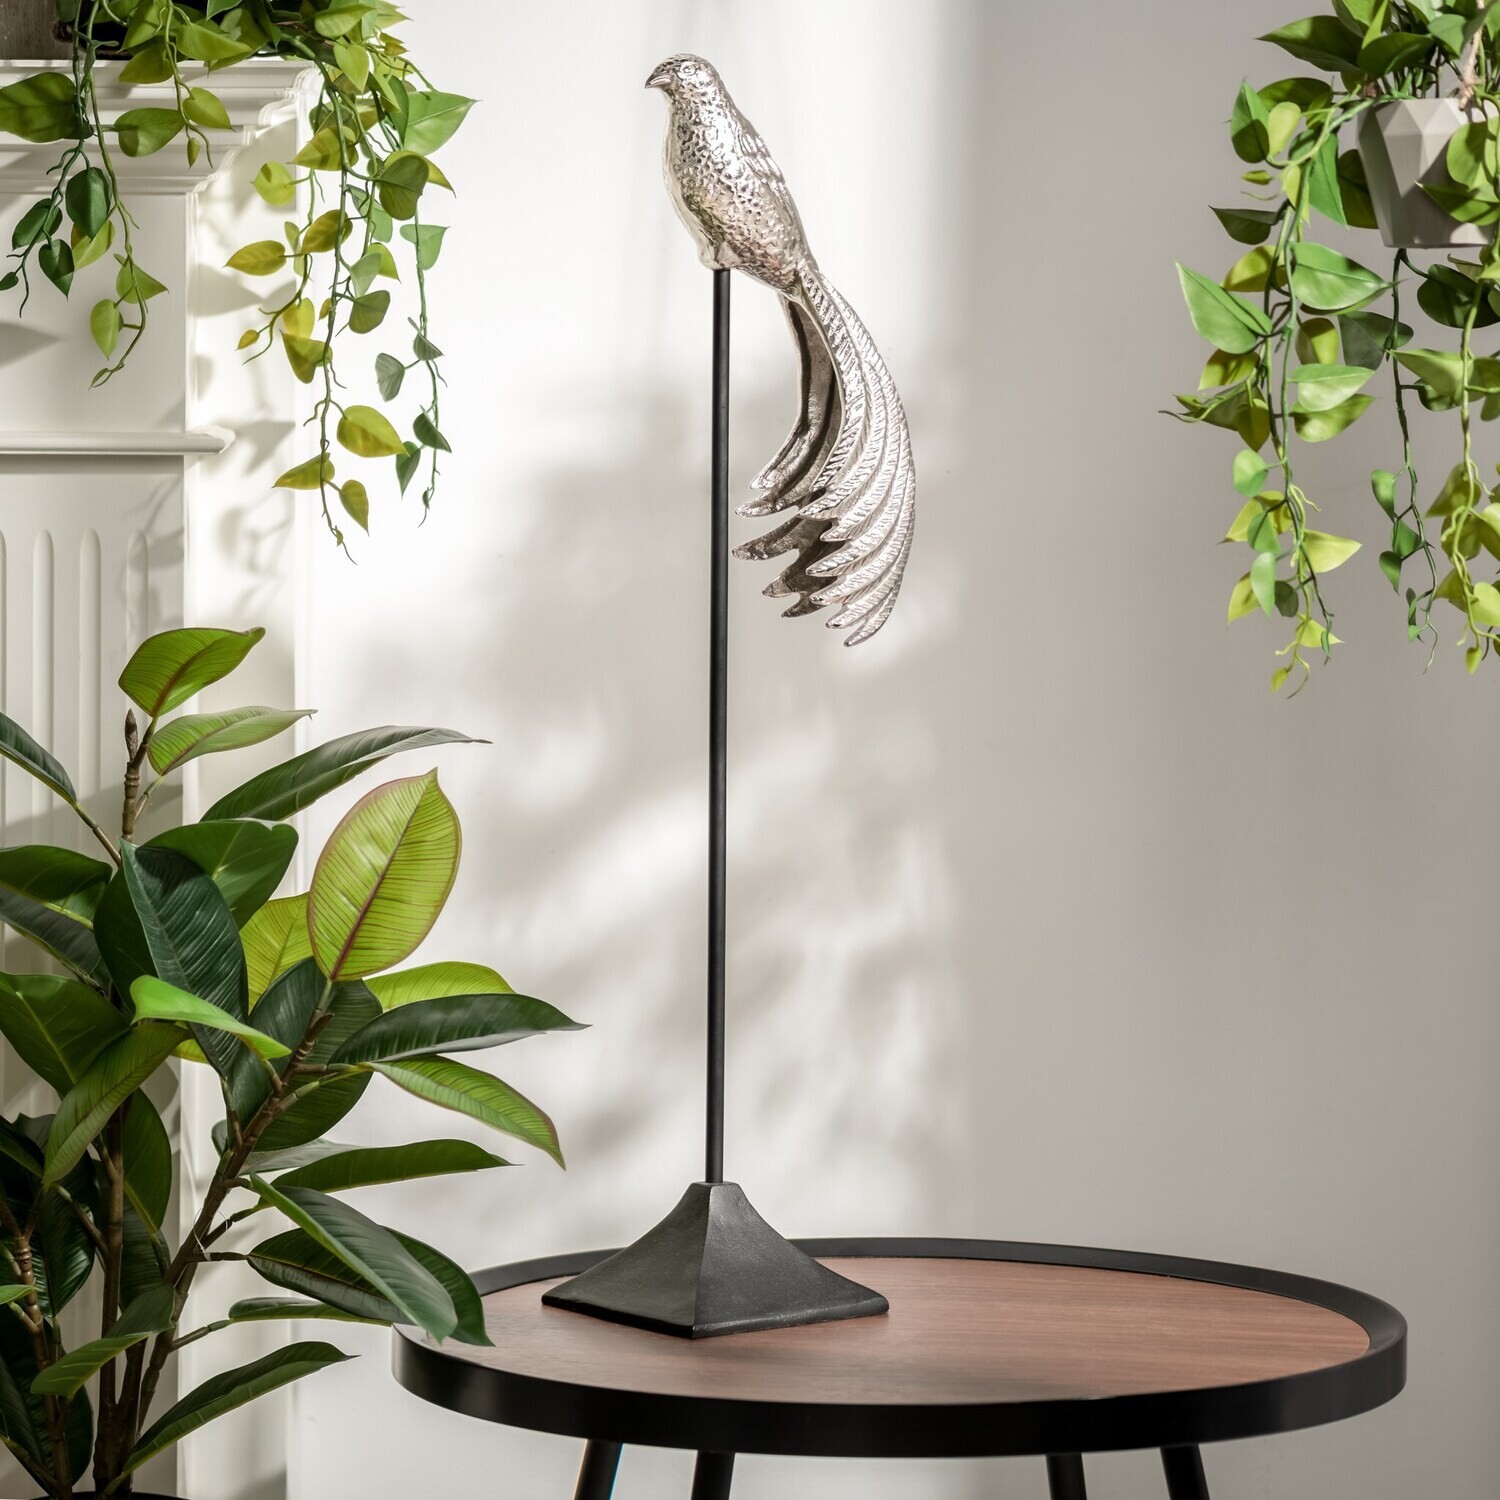 Perched Bird of Paradise Sculpture 30.5"